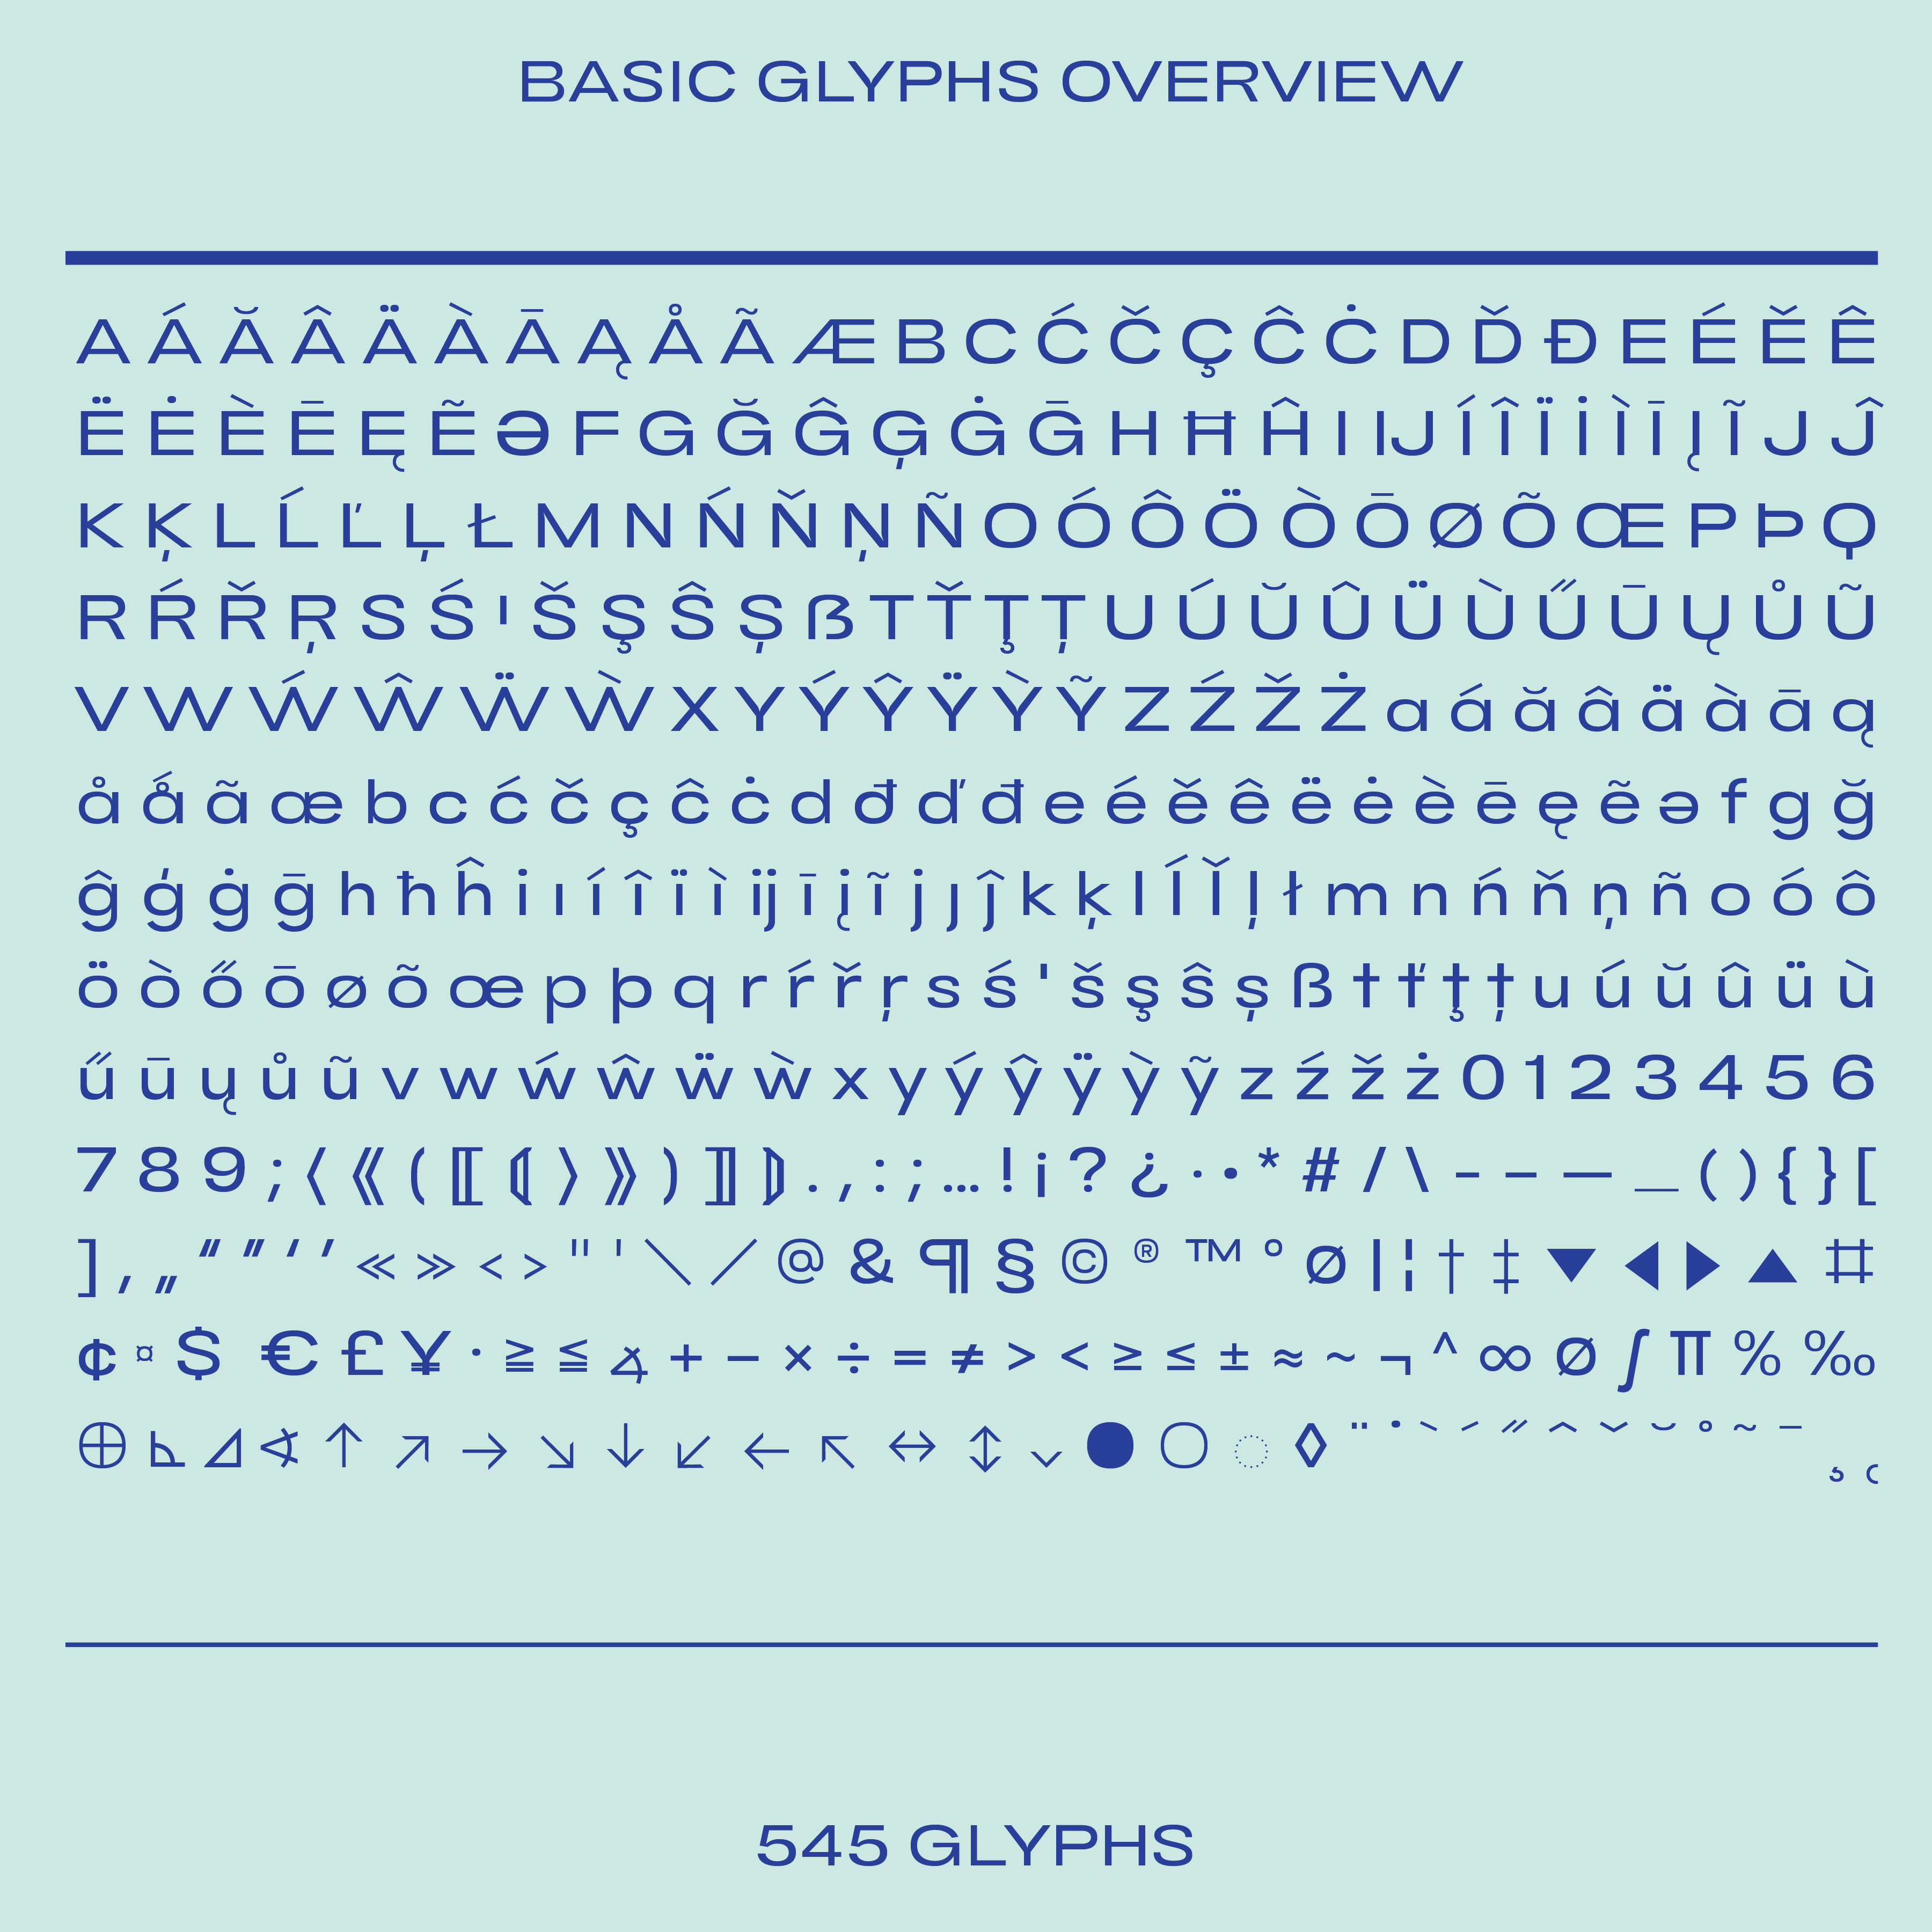 Bauhaus Byrl, basic glyphs overview